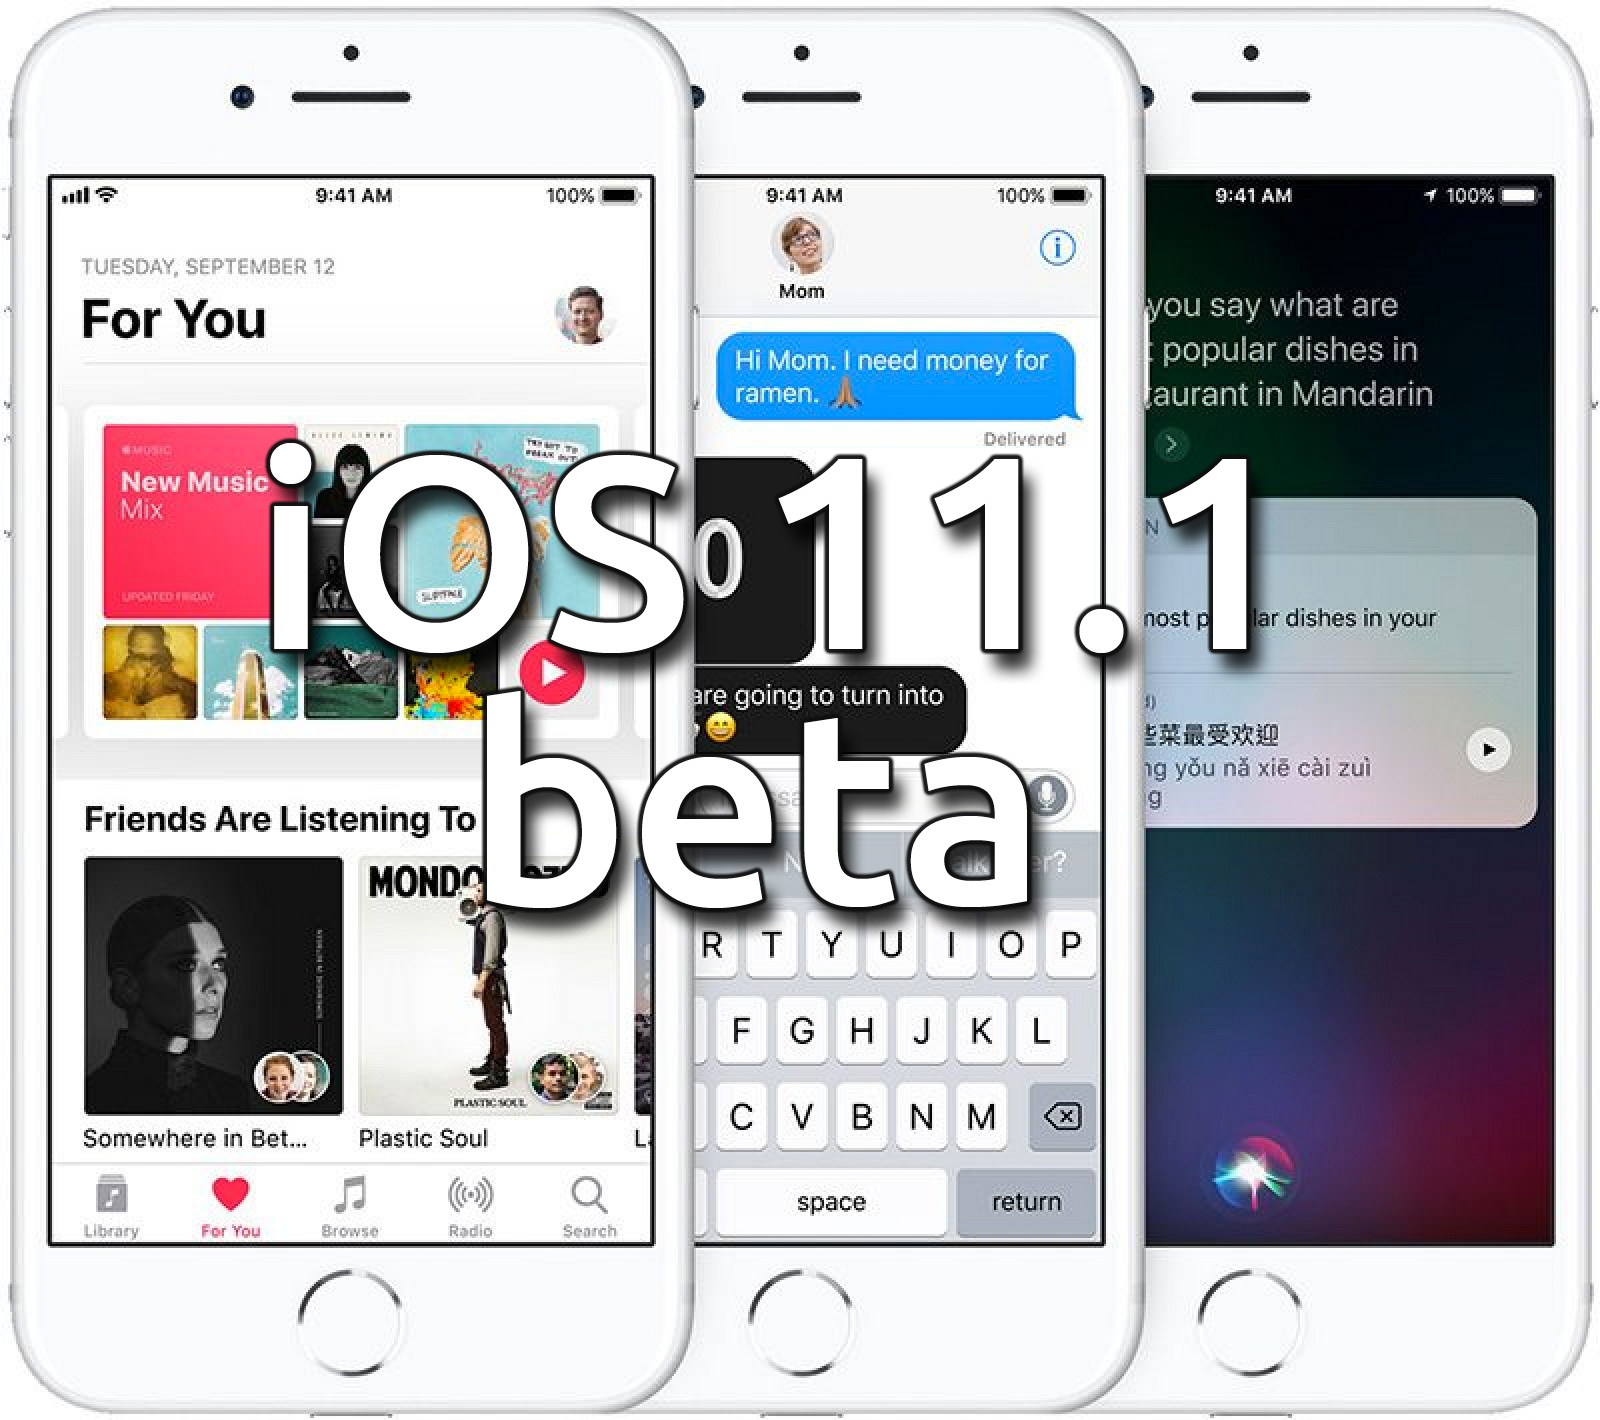 iOS 11.1 beta